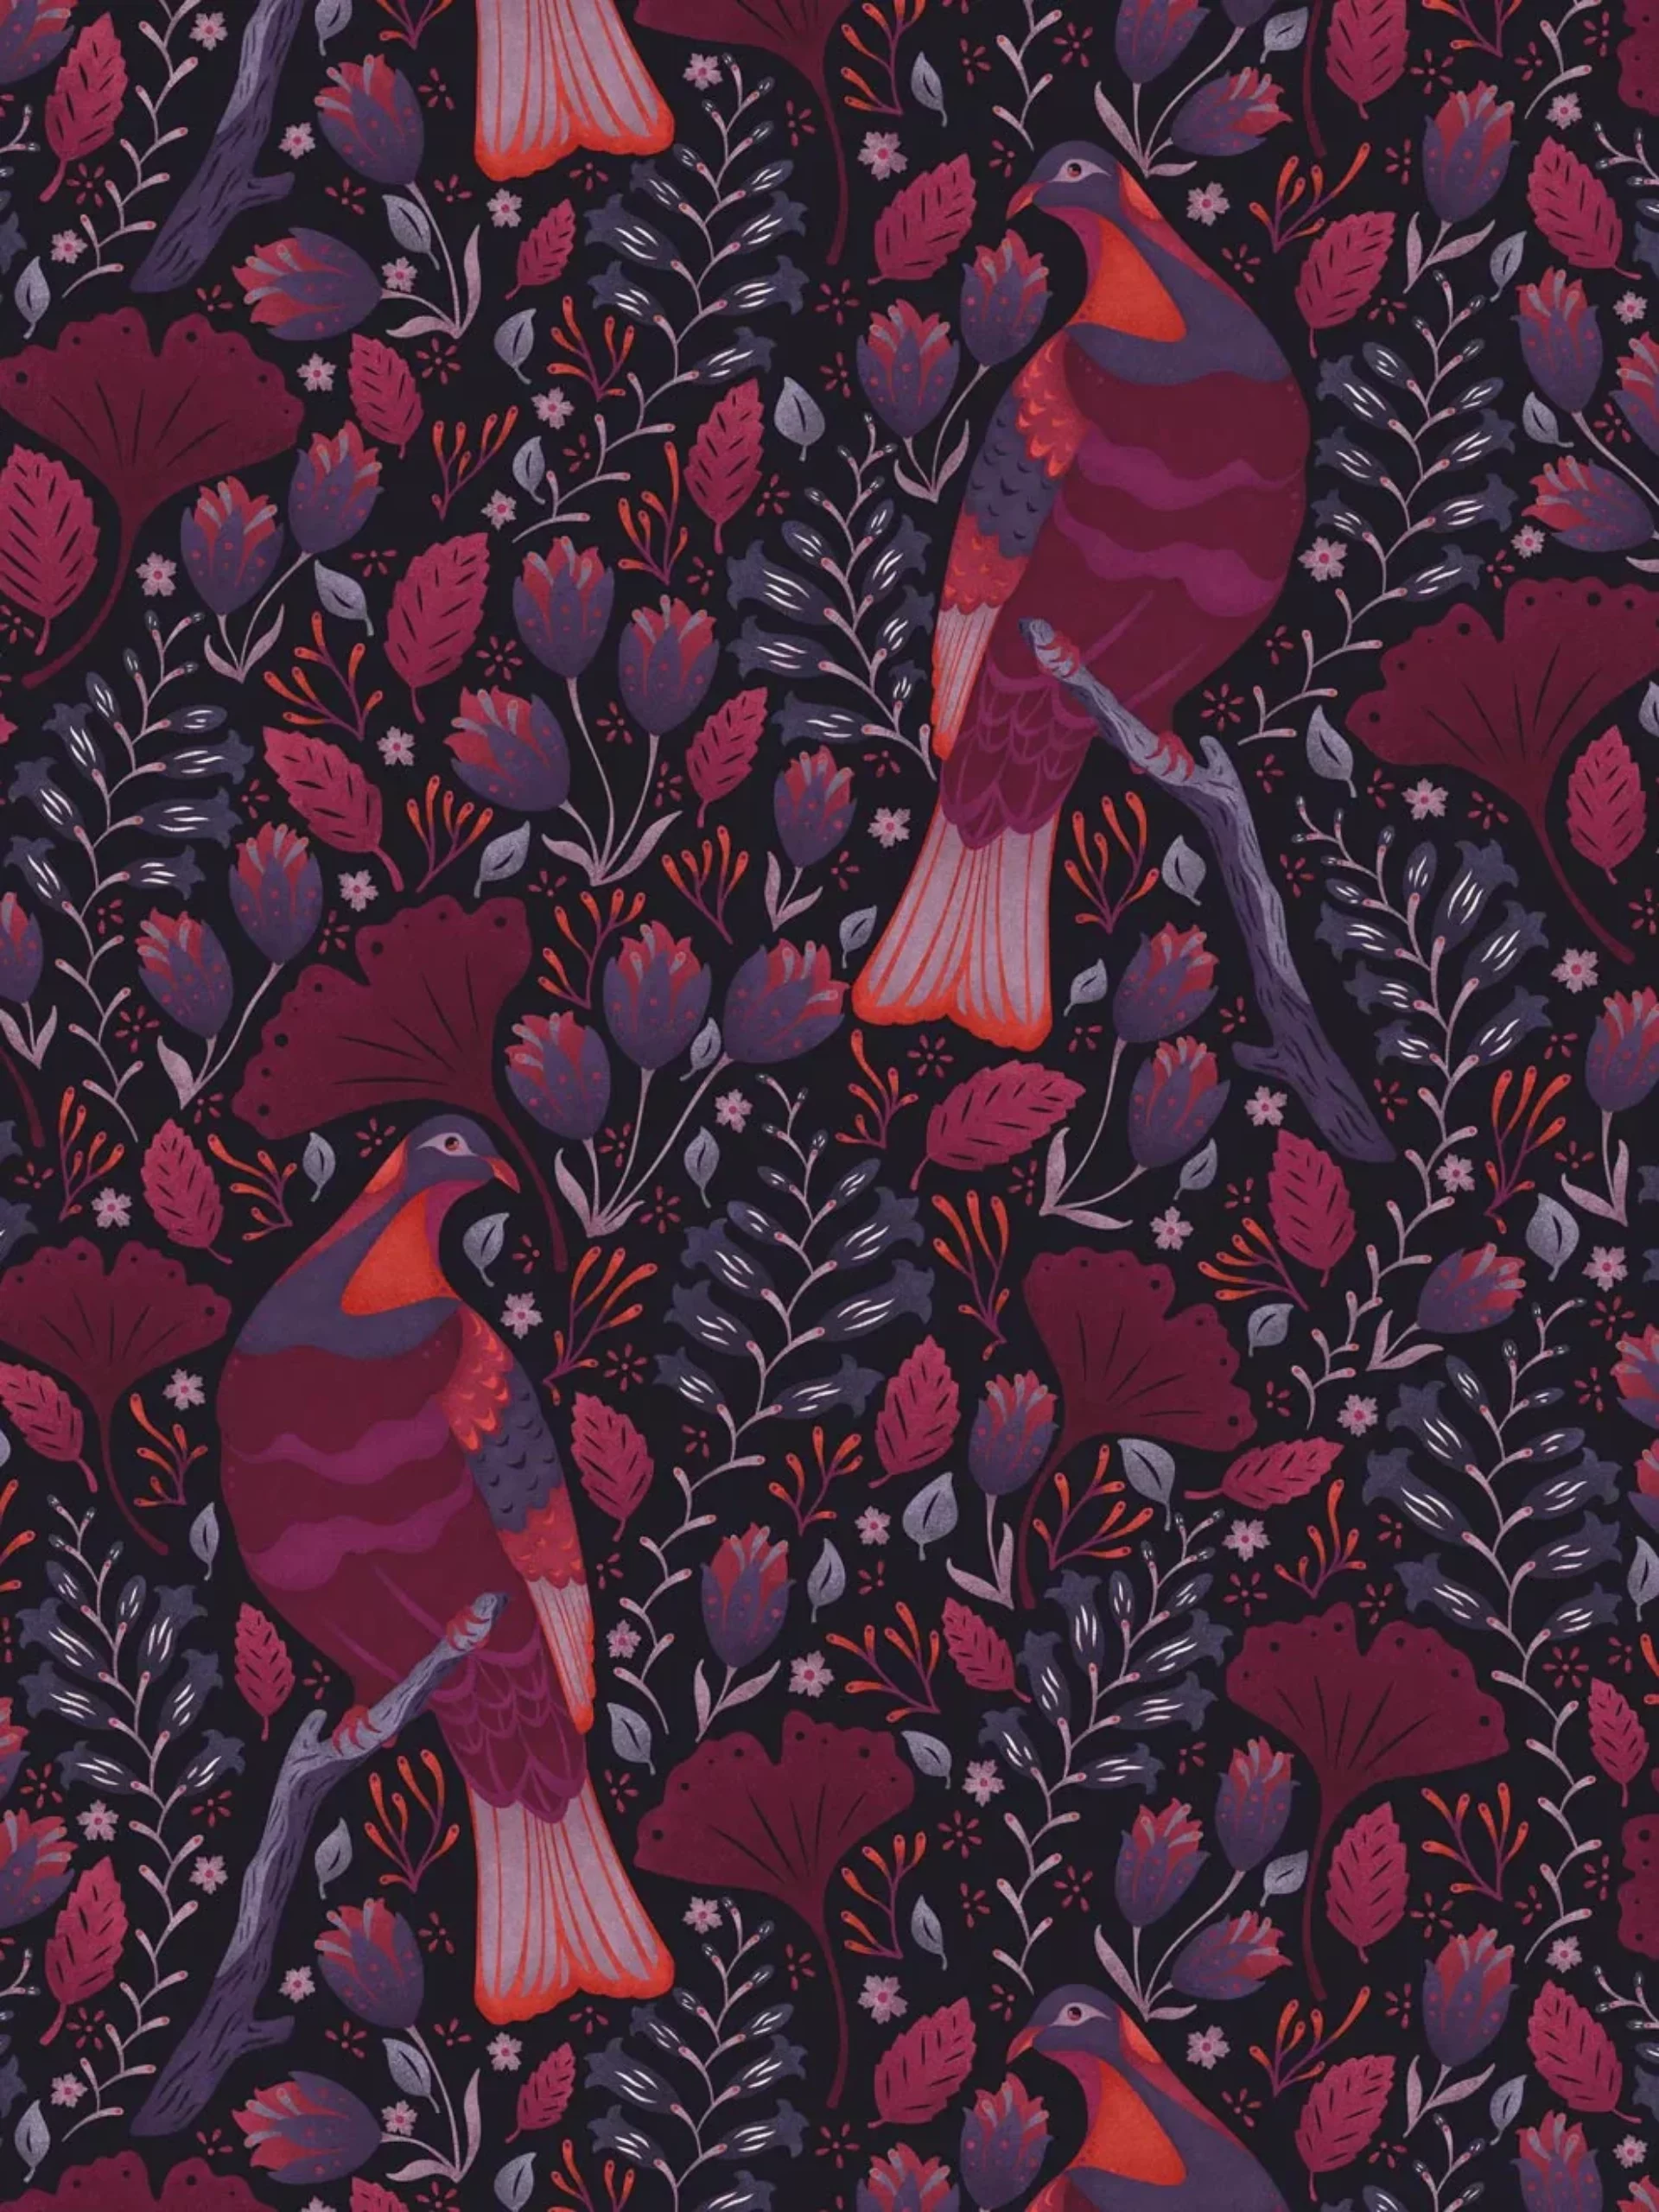 berry and bird wallpaper evolve pantone viva magenta blog